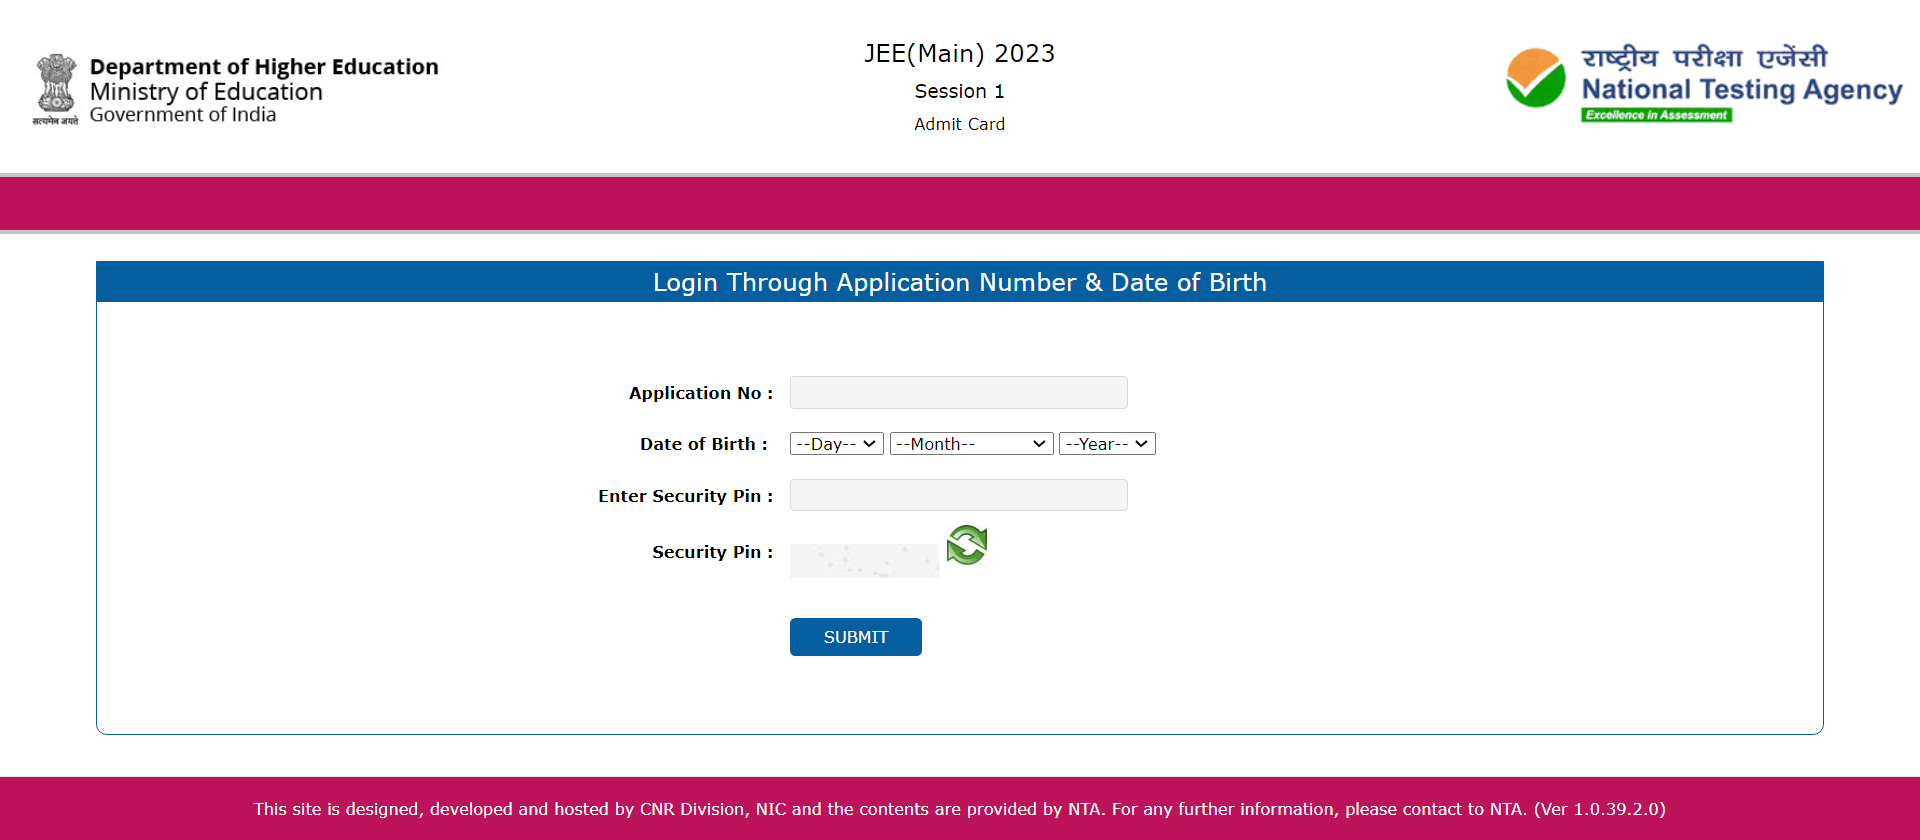 JEE Main Admit Card 2023 Session 2 Login 